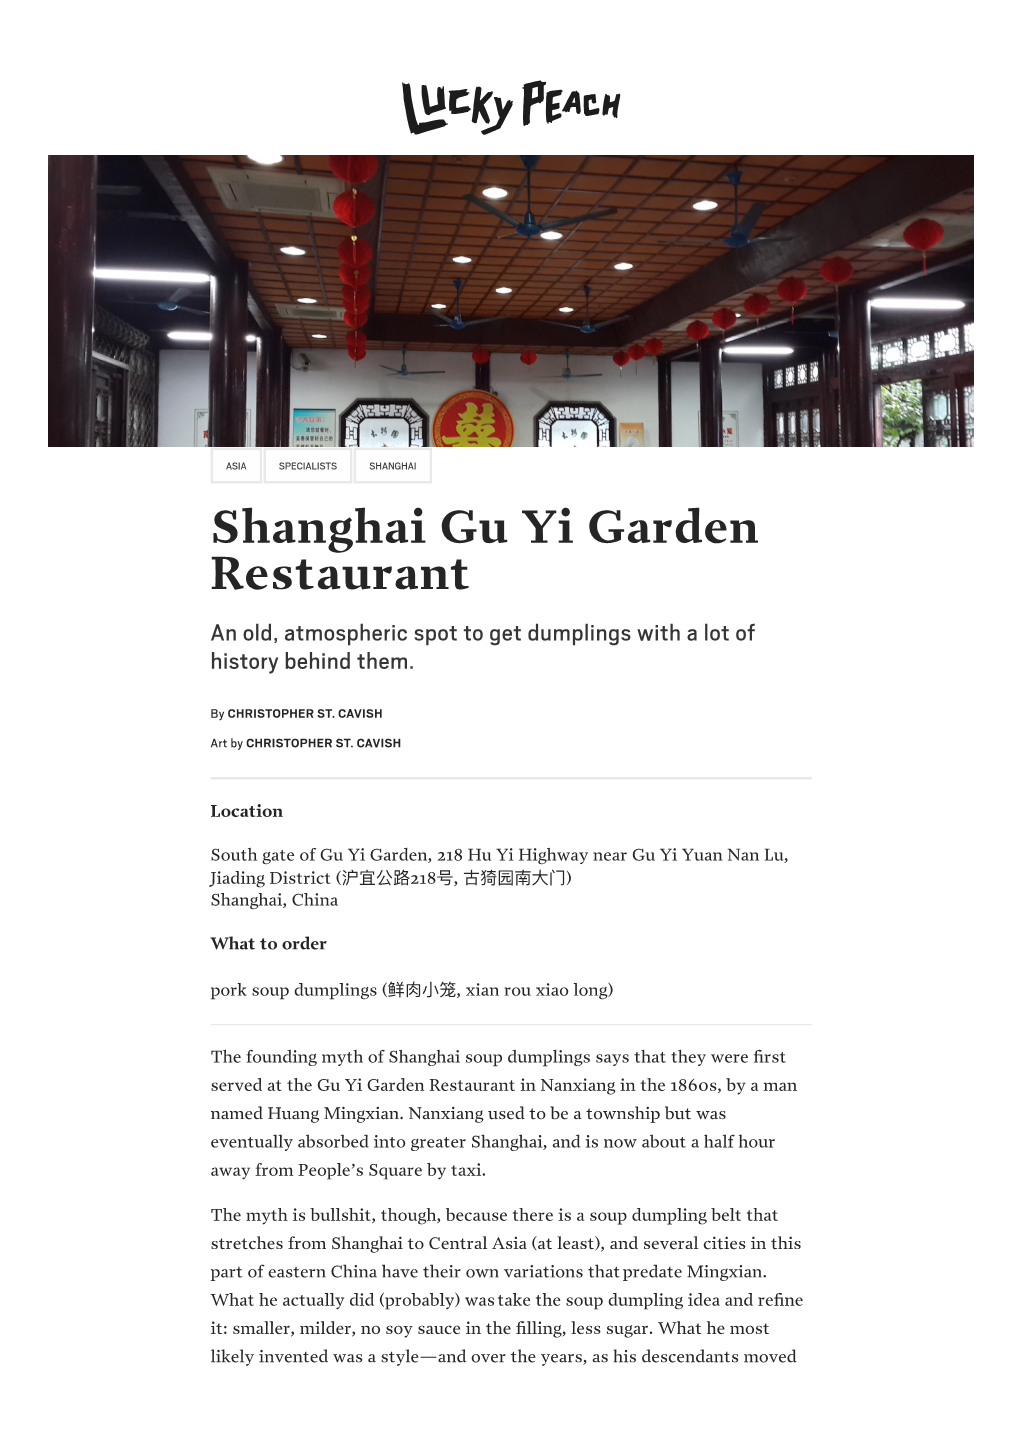 Shanghai Gu Yi Garden Restaurant an Old, Atmospheric Spot to Get Dumplings with a Lot of History Behind Them